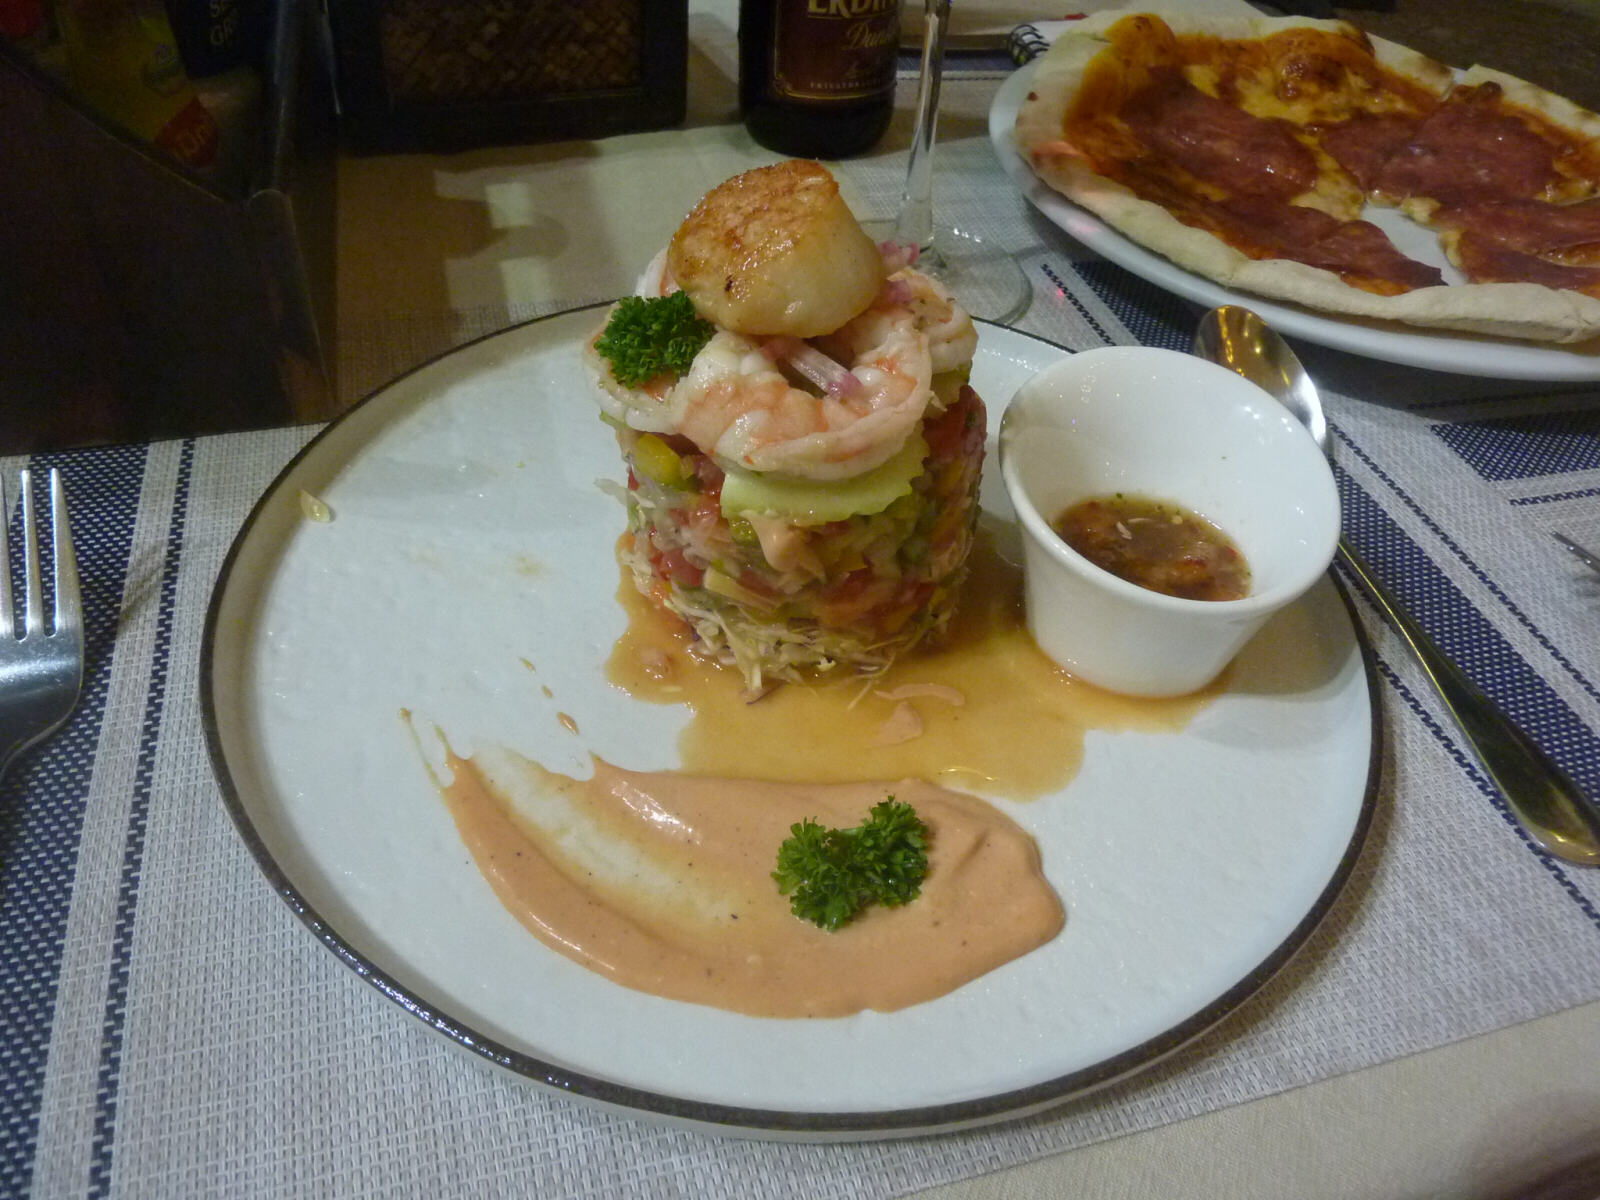 The seafood stack at the Tasting Room in Khao San road Bangkok